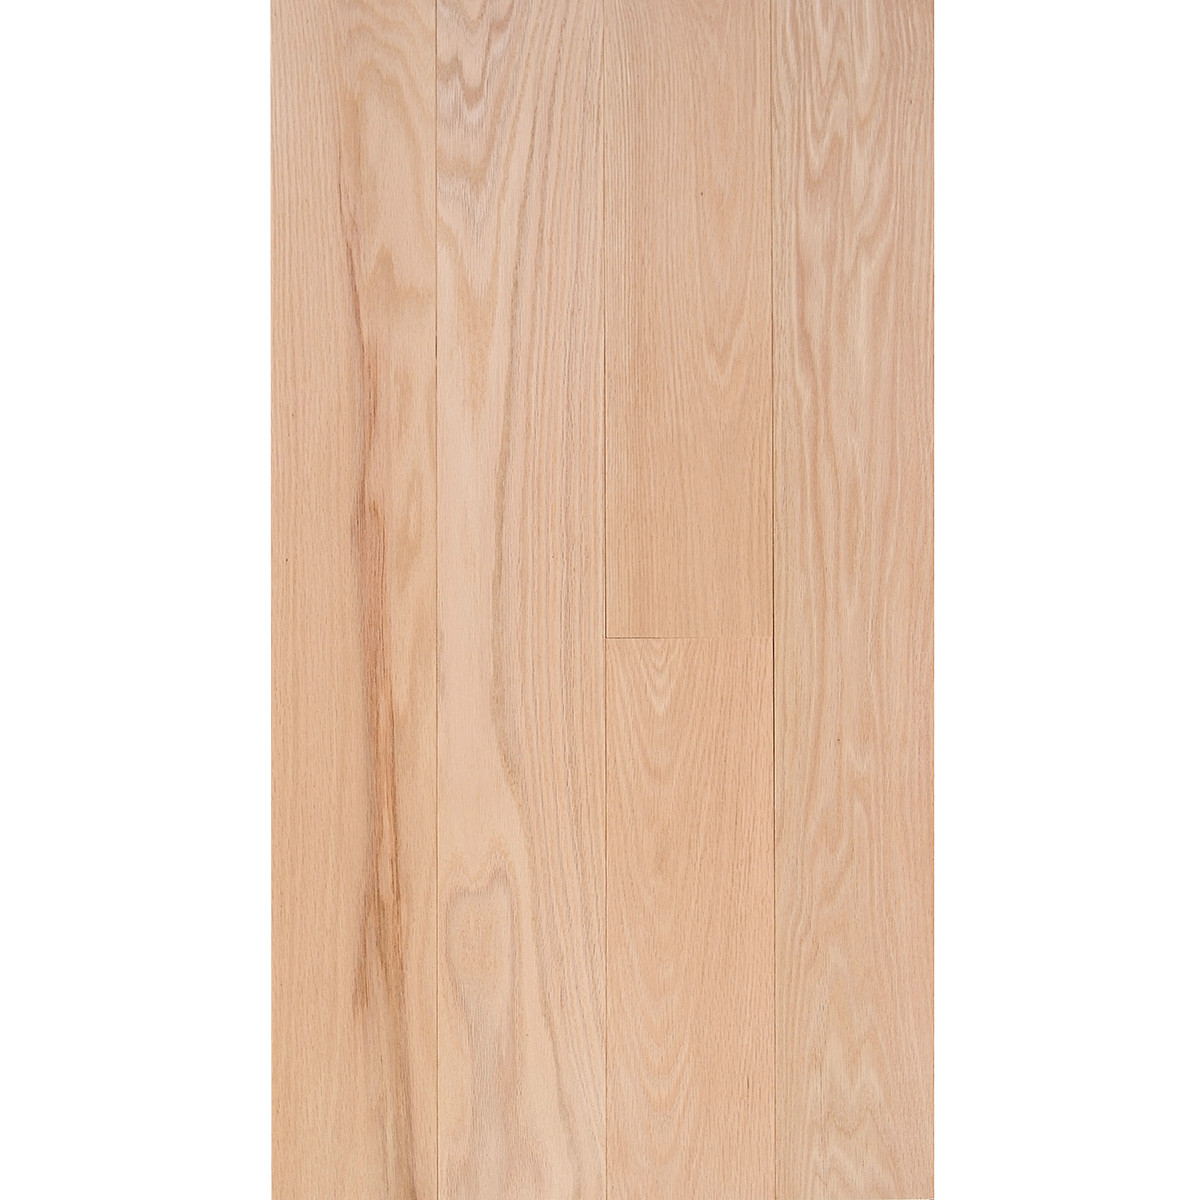 hardwood flooring online shopping of red oak 3 4 x 5 select grade flooring with regard to fs 5 redoak select em flooring